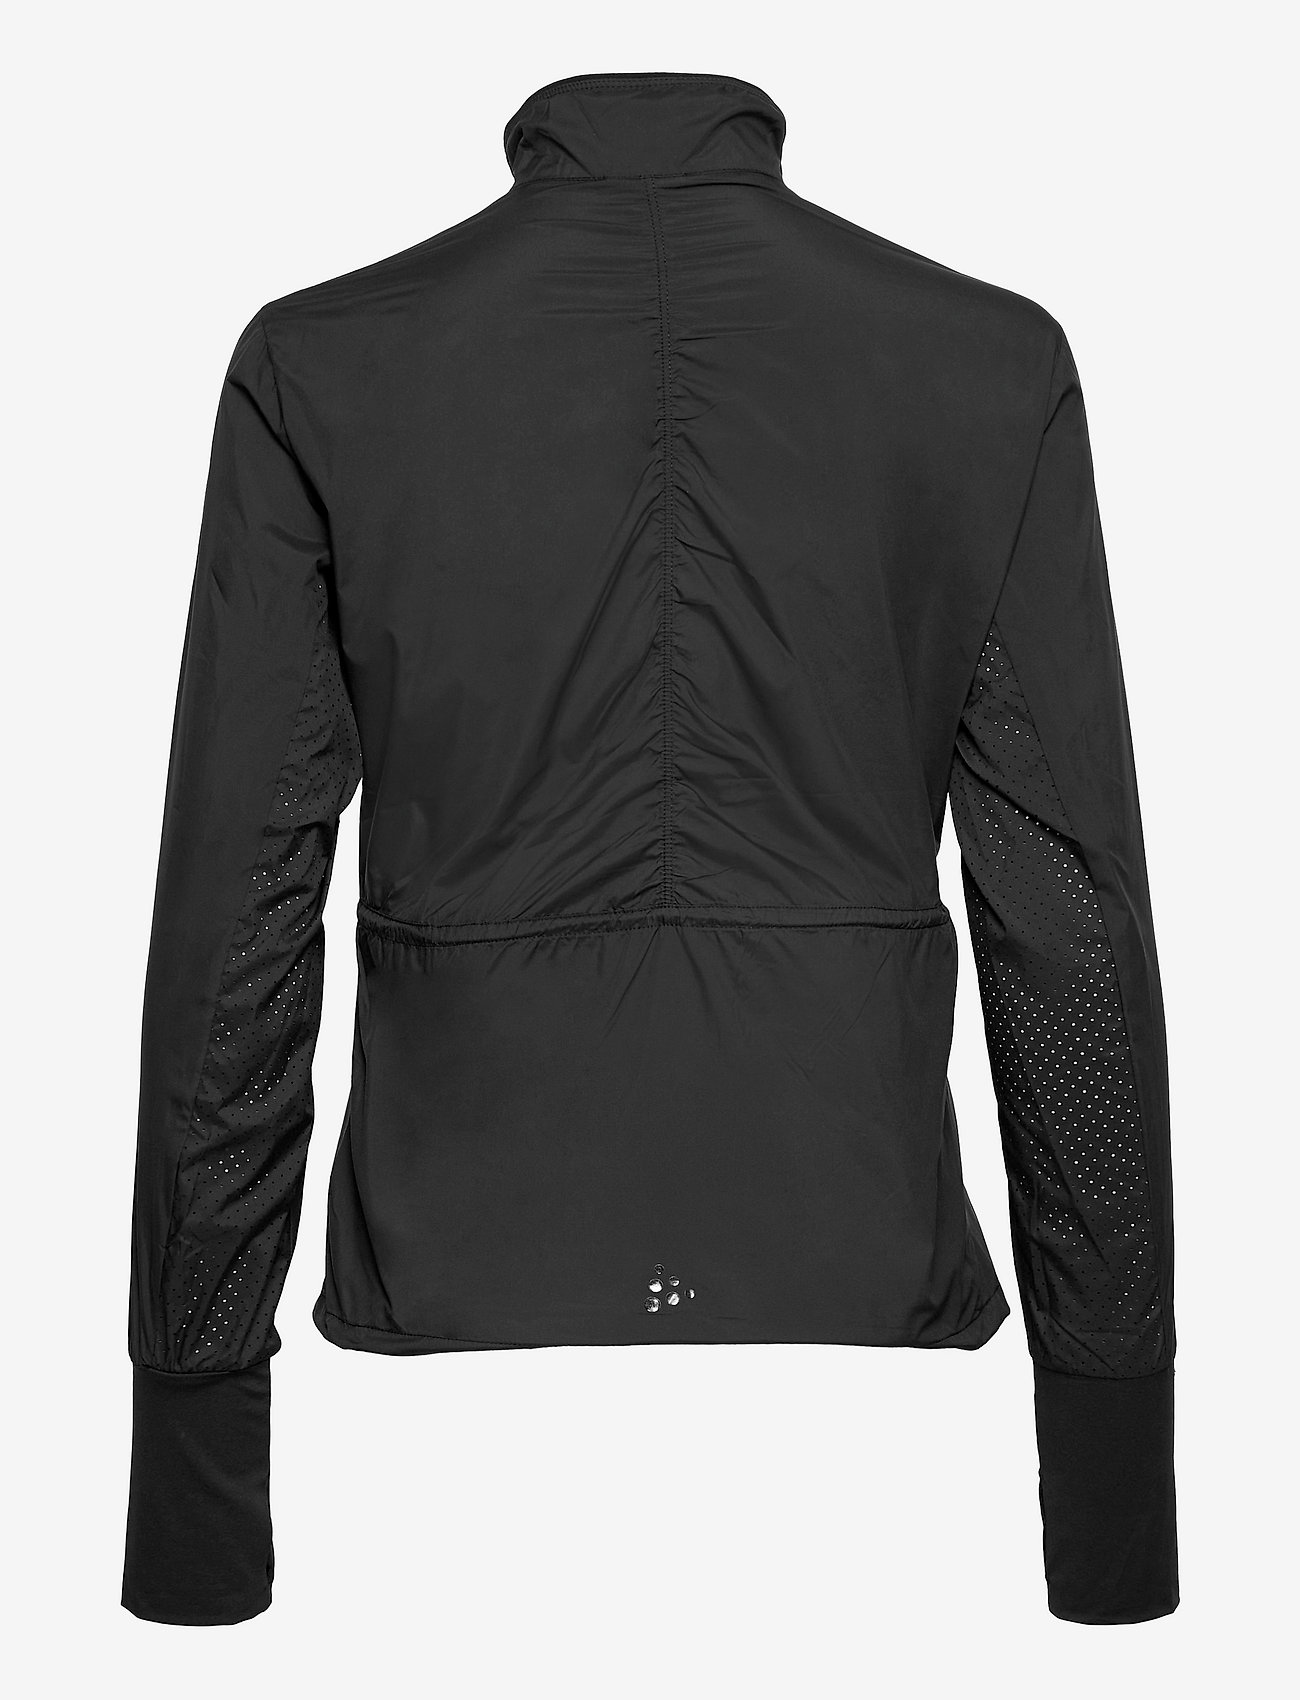 Craft - Adv Essence Wind Jacket W - sportiska stila virsjakas - black - 1